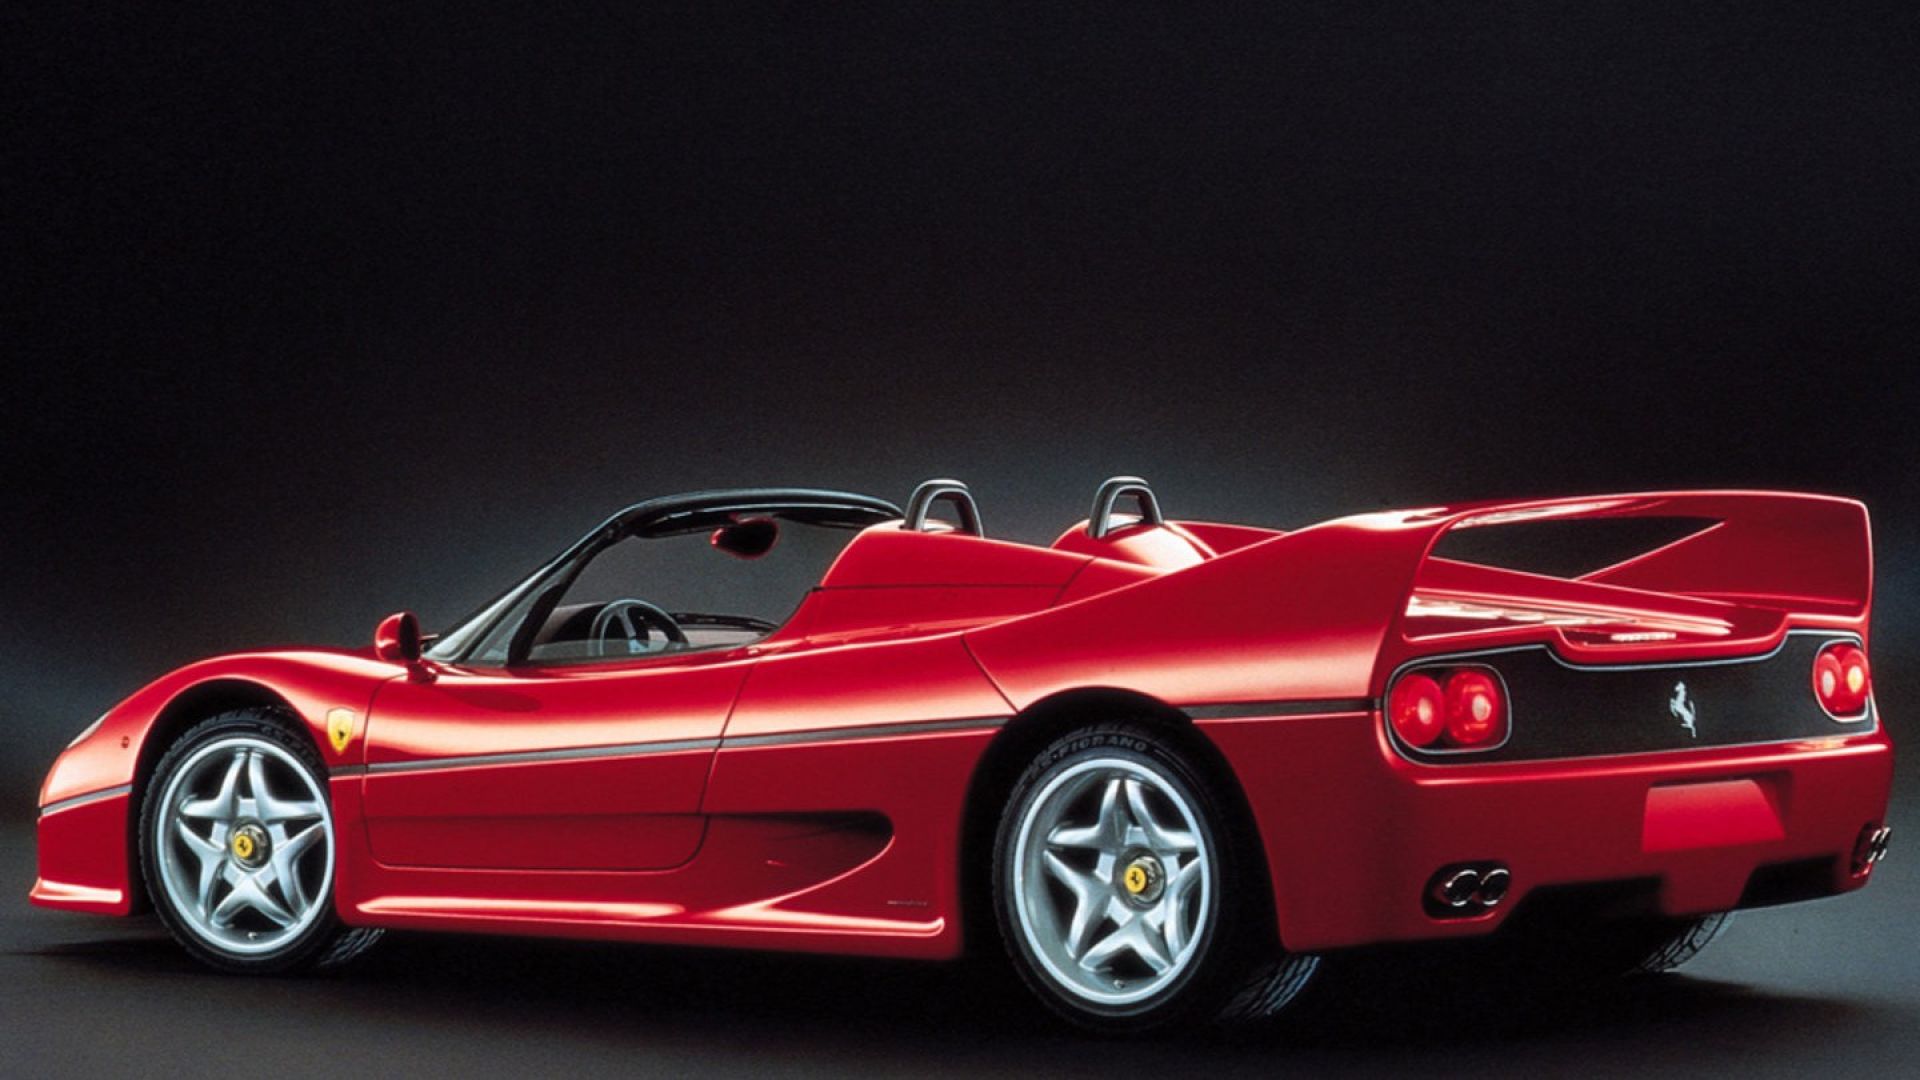 Rapido ferrari. Ferrari f50 1995. Ferrari f14 t. Ferrari f50 кабриолет. Ferrari f50 Silver.